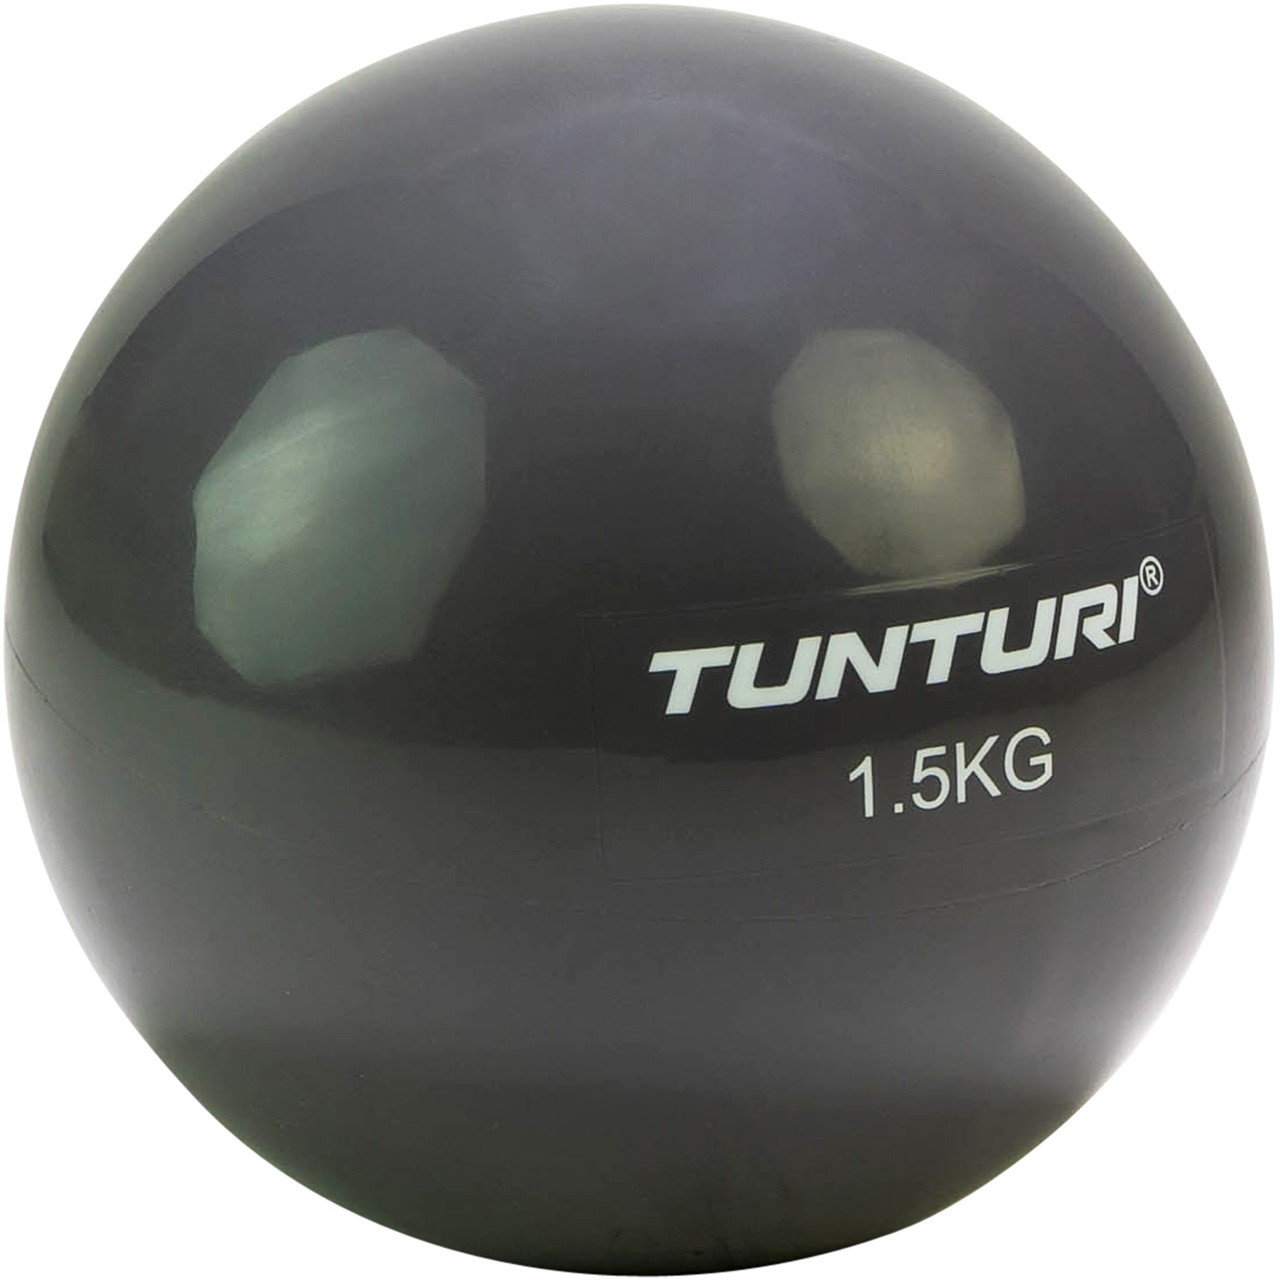 Tunturi Yoga und Pilates Toning Ball 1.5 kg Anthracite